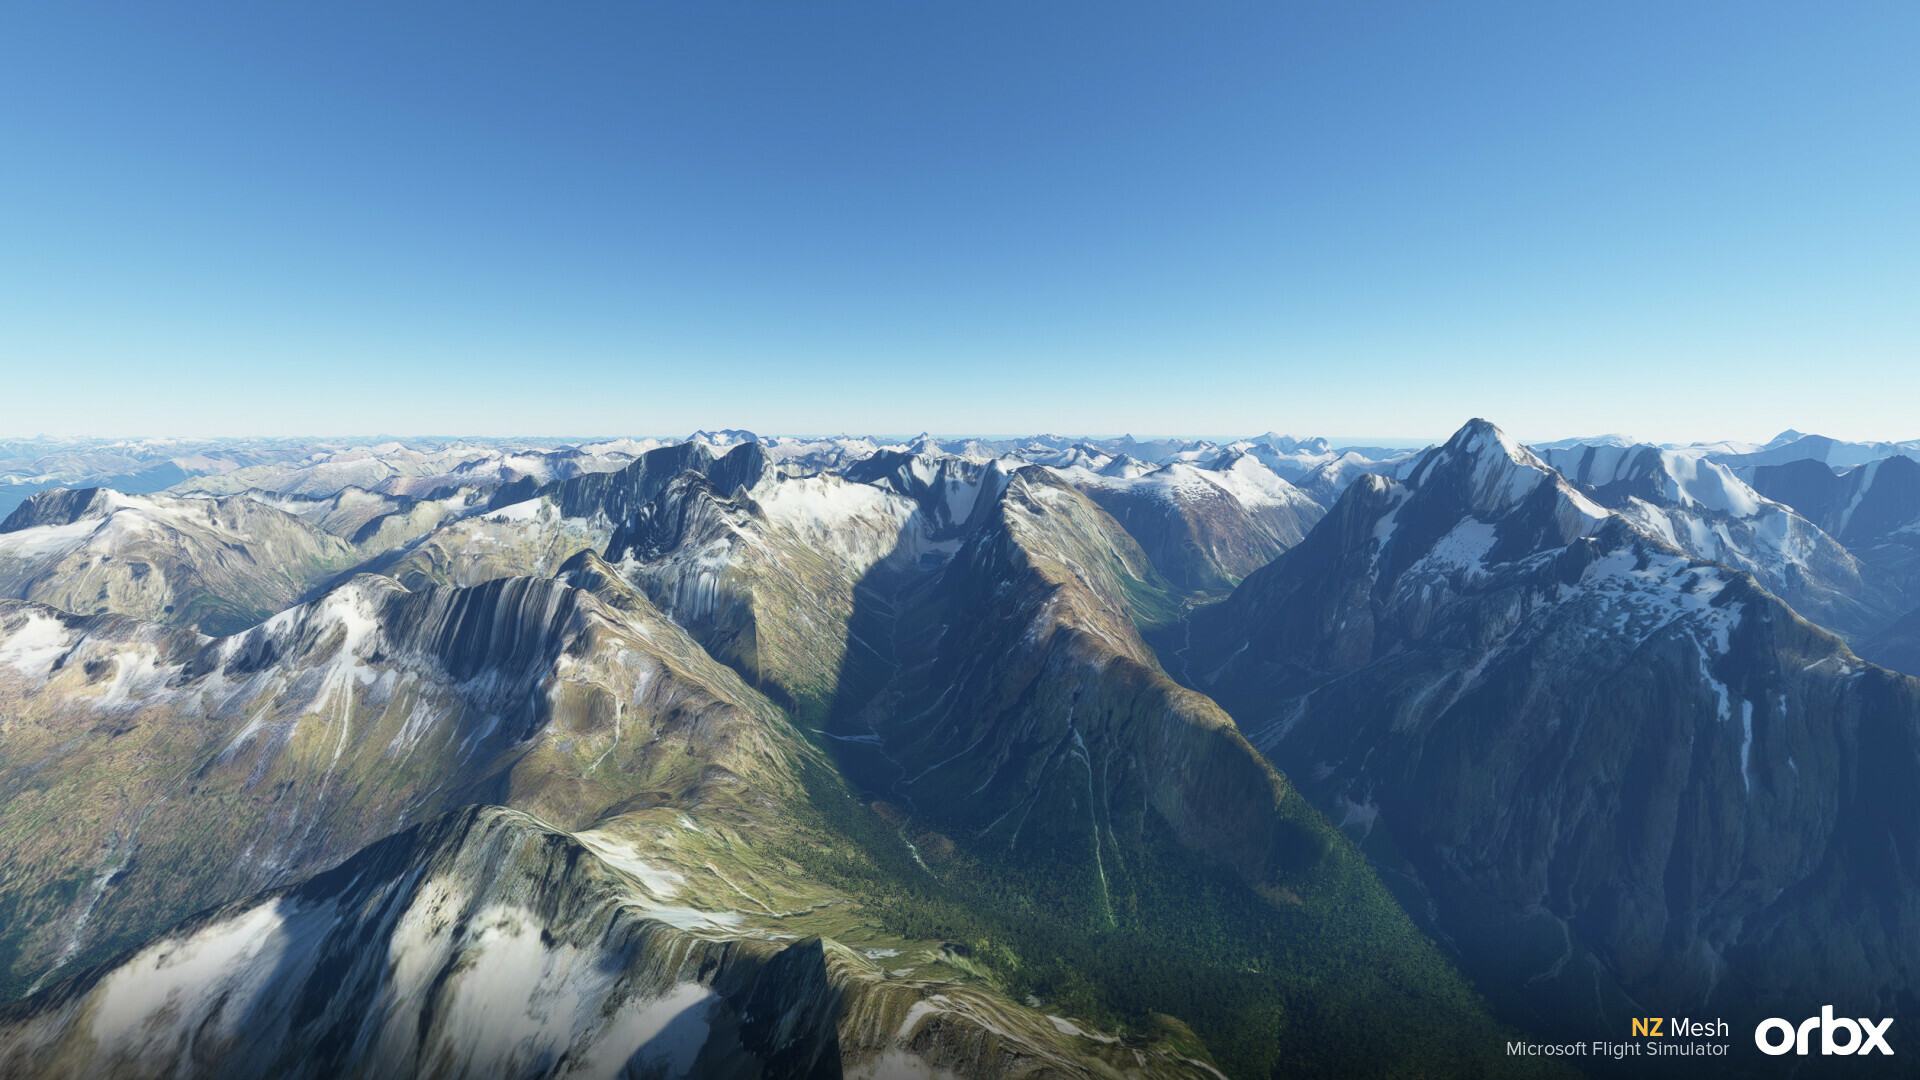 Orbx Releases NZ Mesh for MSFS - Microsoft Flight Simulator, Orbx